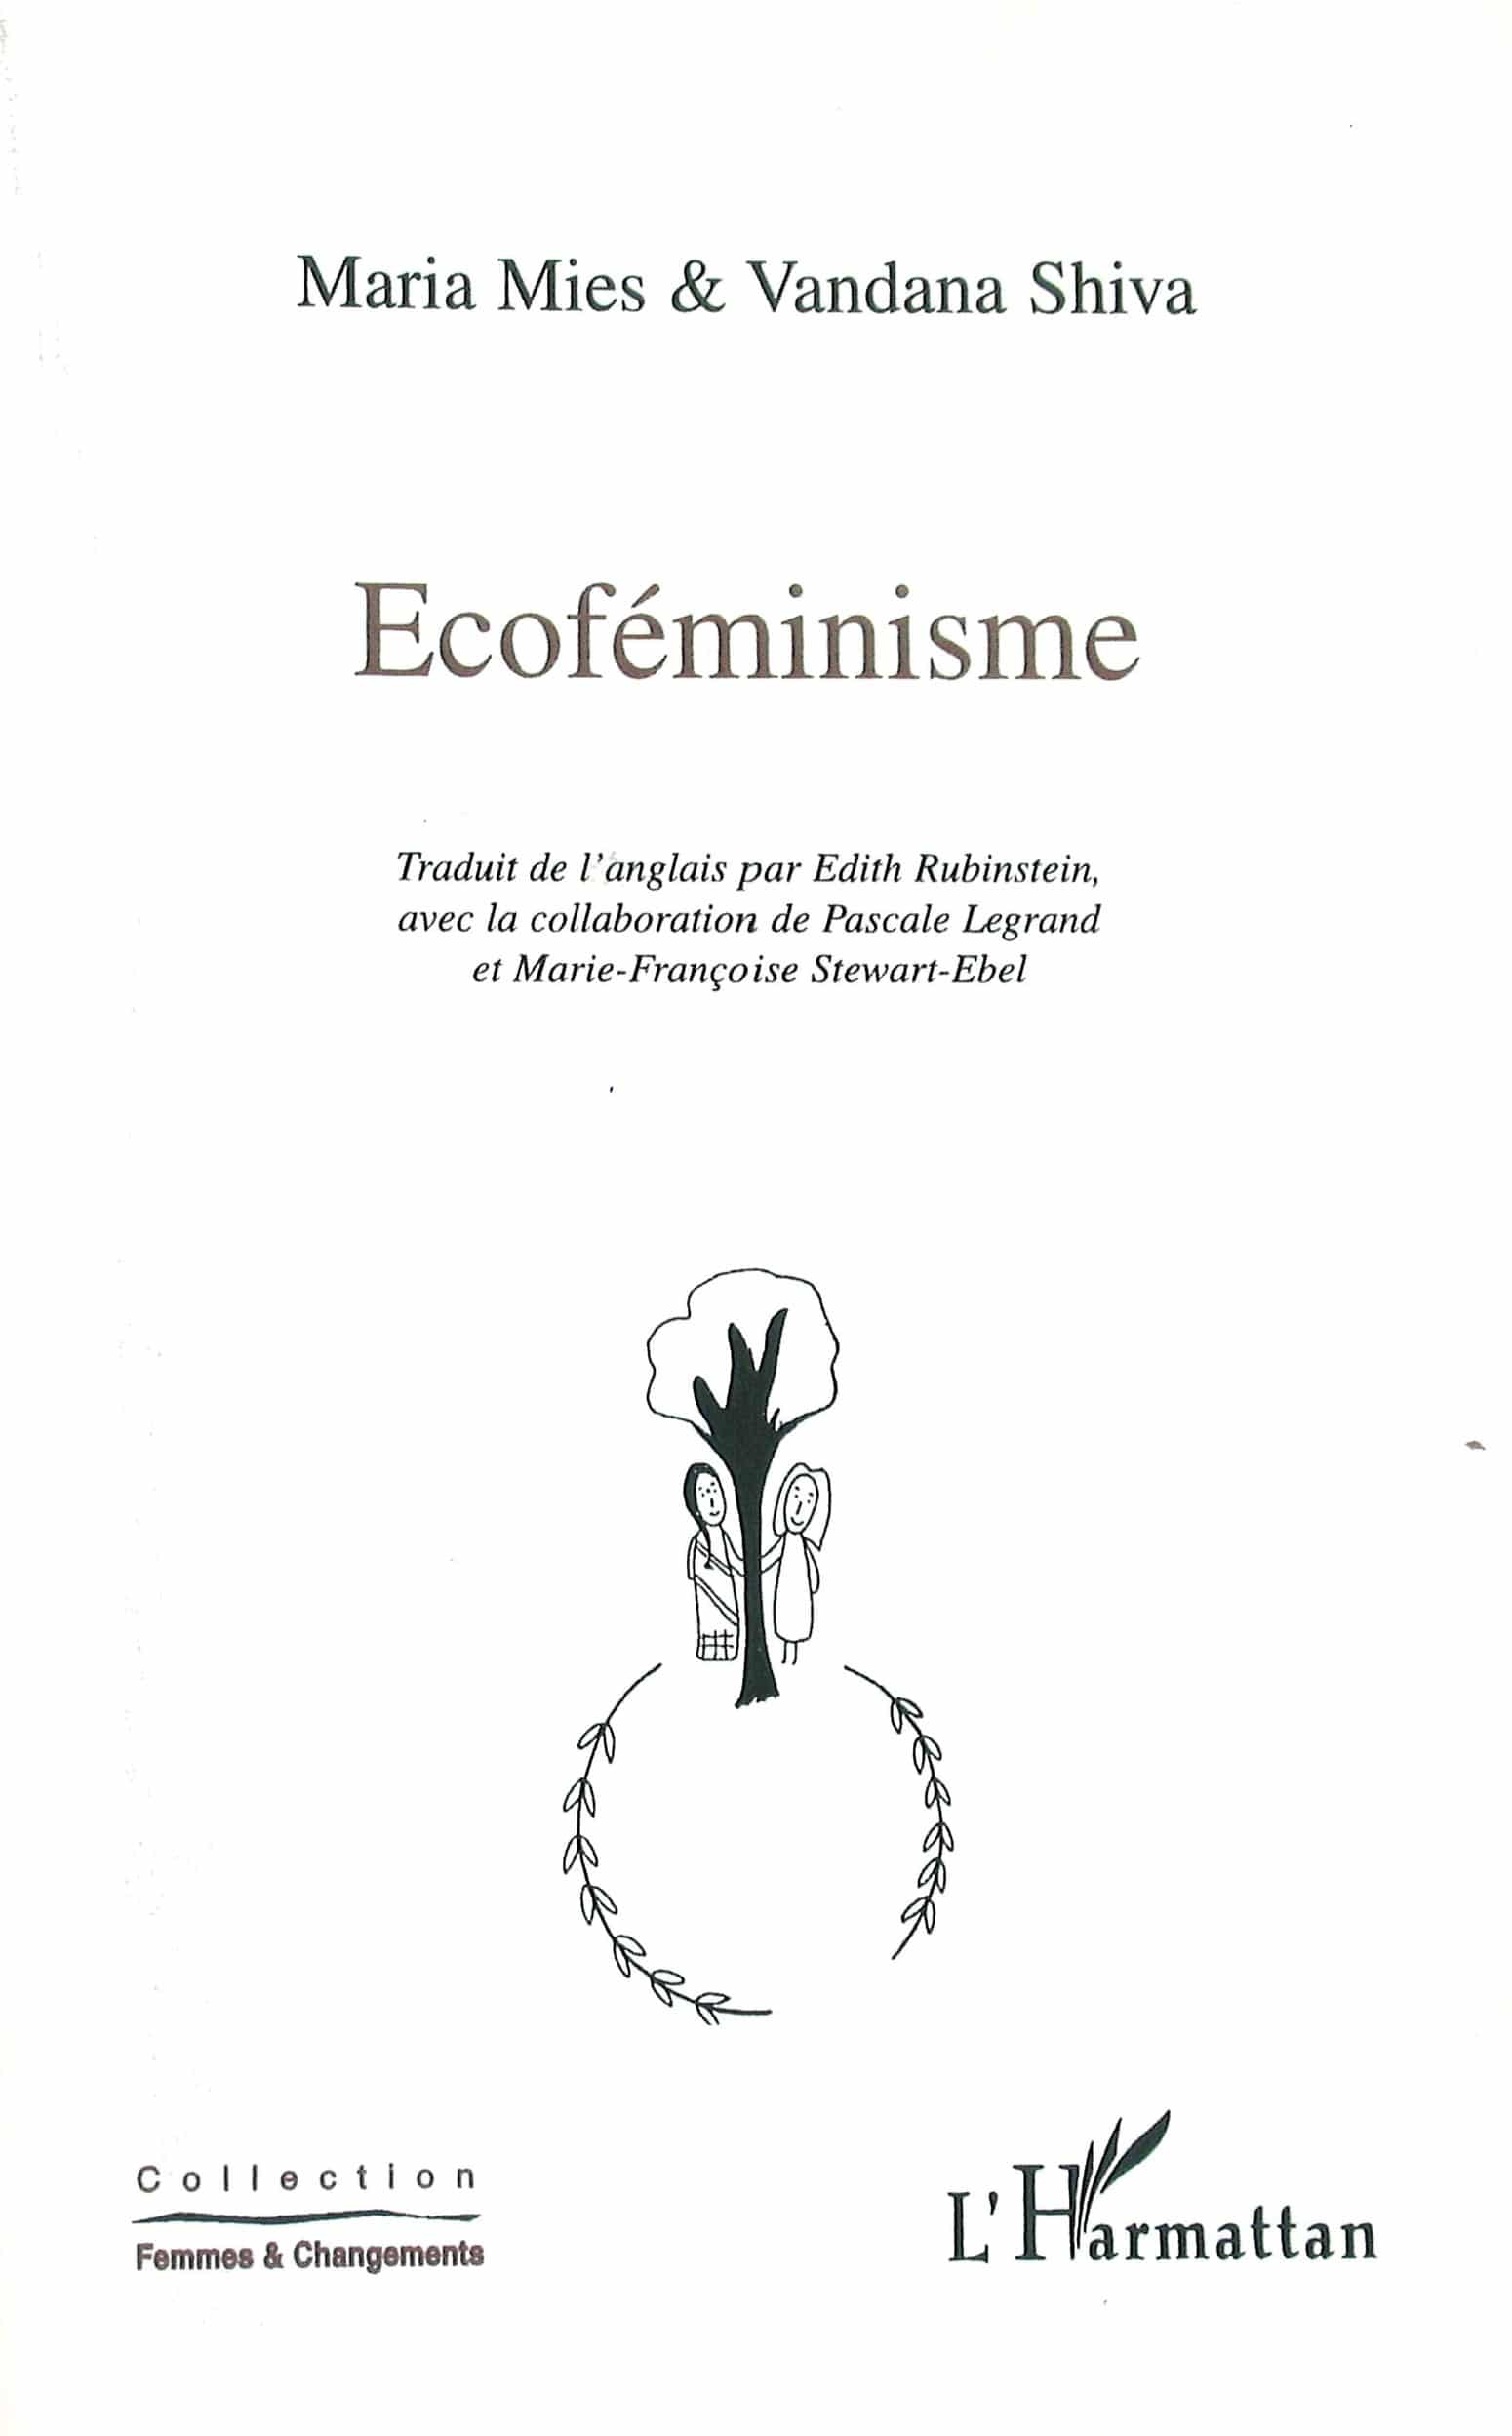 Maria Mies et Vandana Shiva, Ecoféminisme